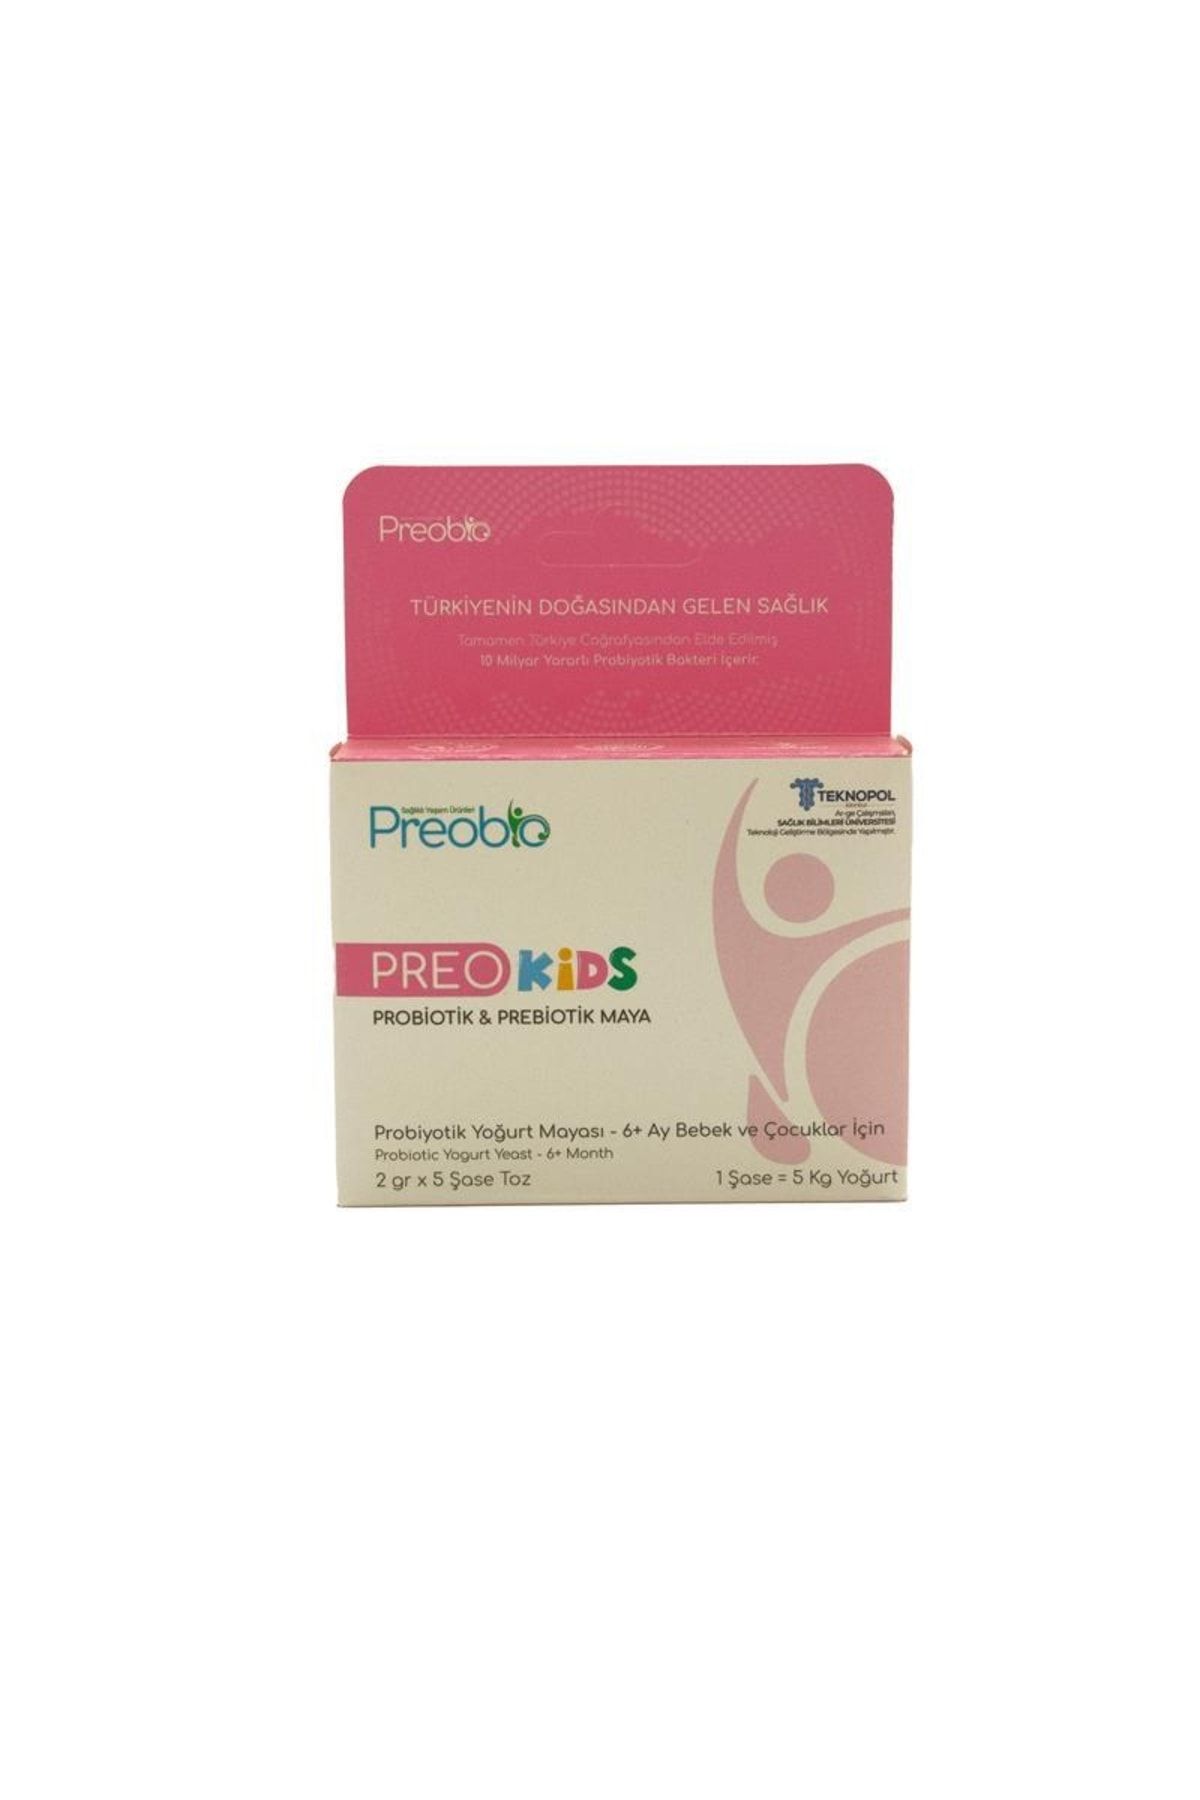 Preobio Preo Kids (PROBİYOTİK) 5 Şase X 2 gr ( Probiyotik & Prebiotik )